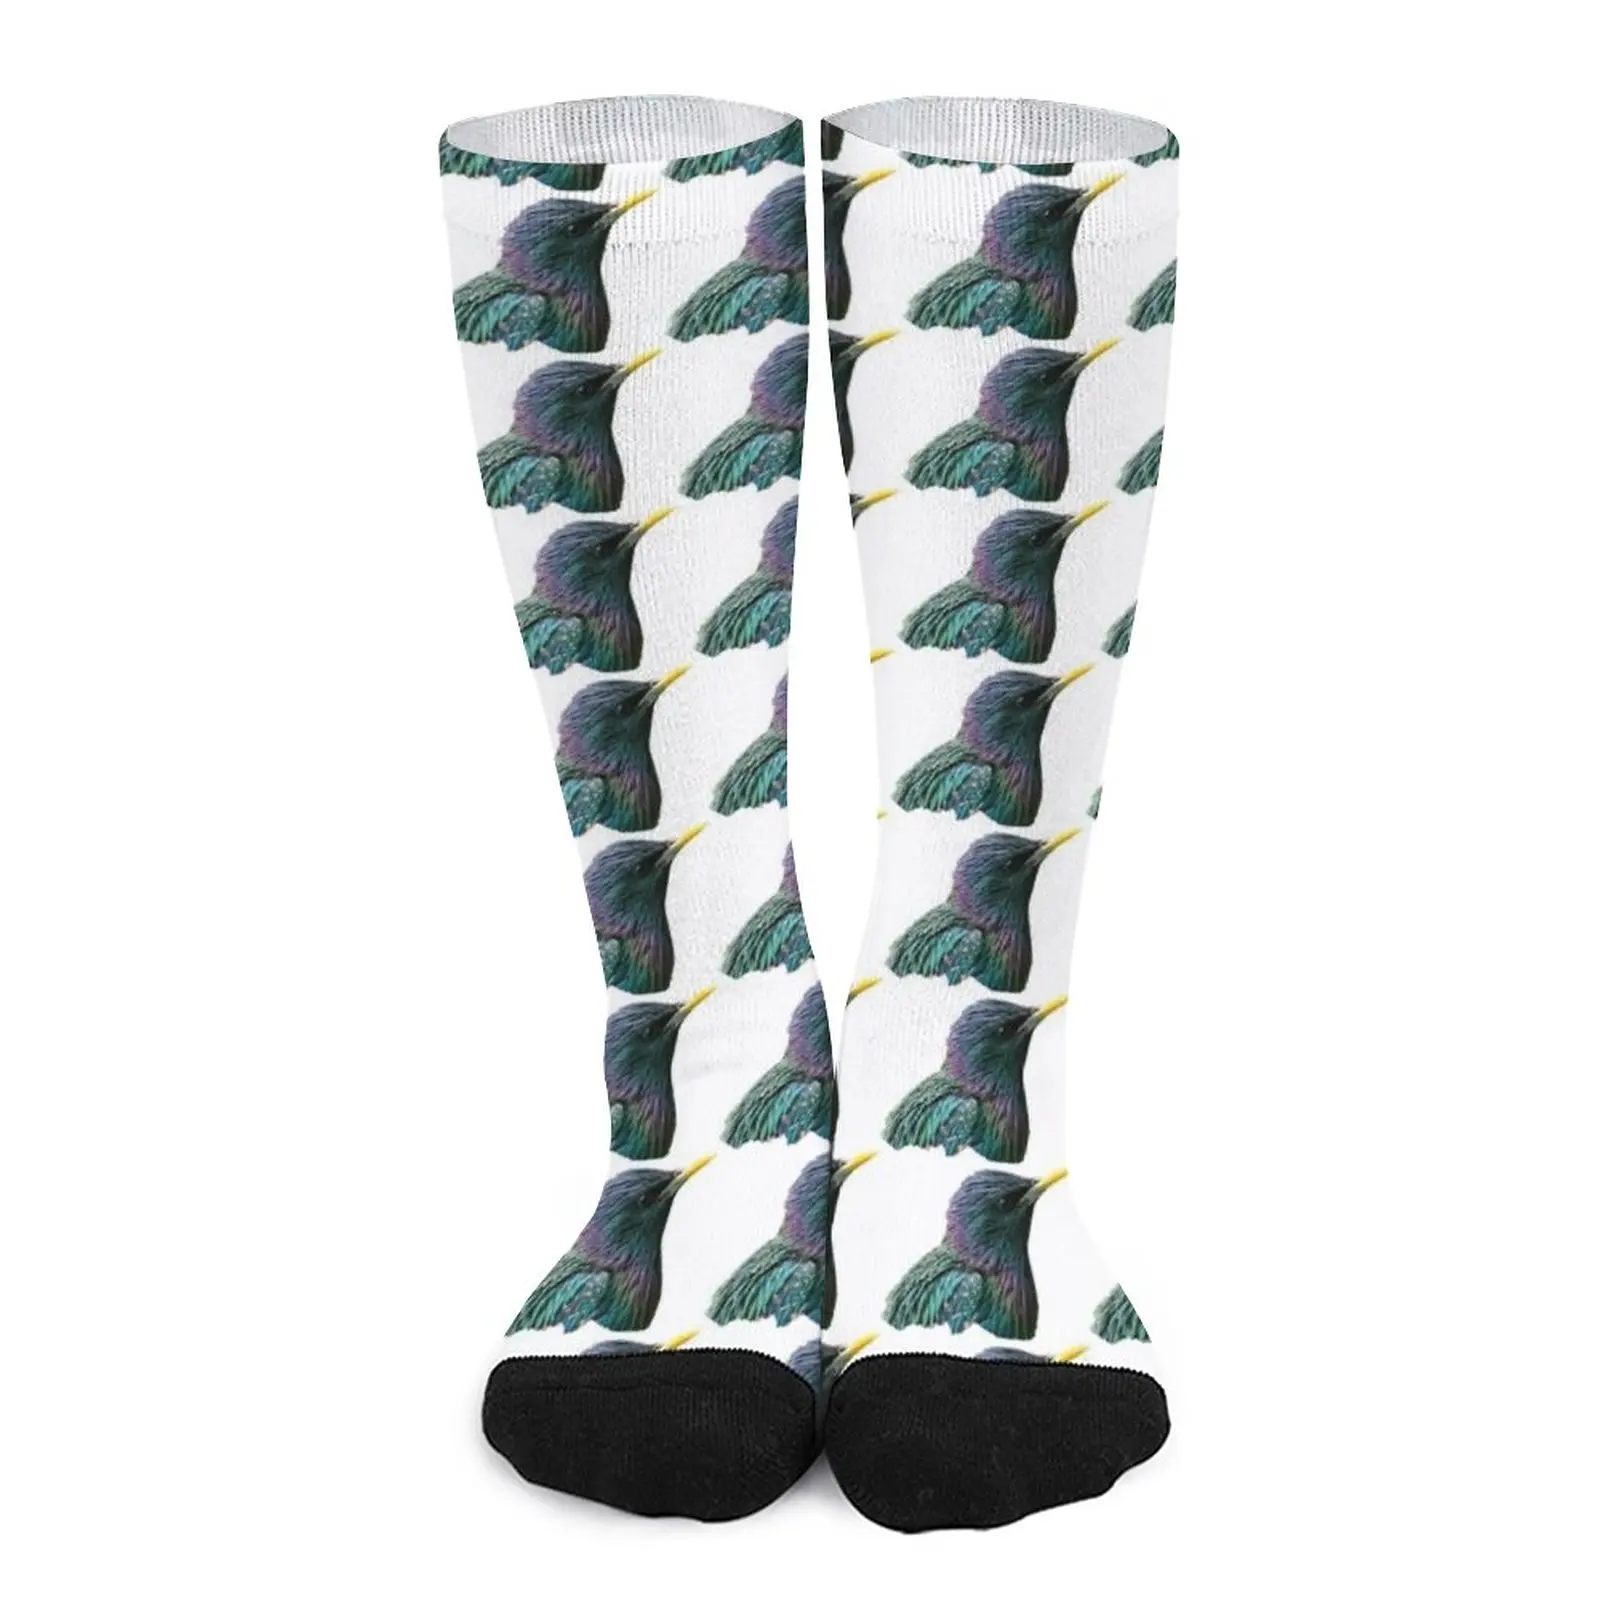 My Starling Socks Women socks ankle socks adidas mid ankle socks hy1005 white drkgrn bludaw